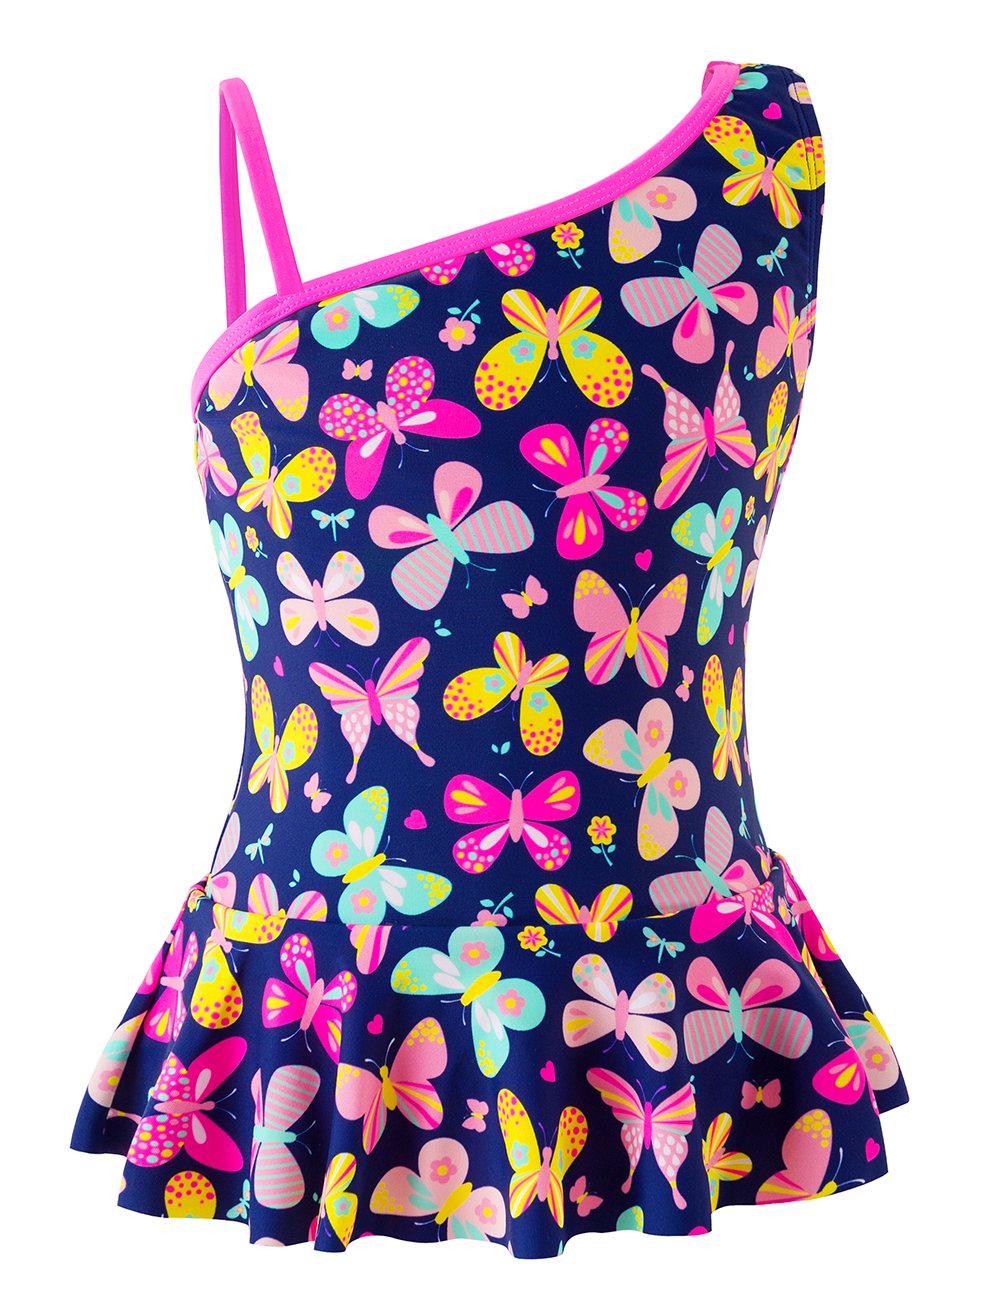 IKALI Swimming Suit, Girls Princess Sky Blue Solid Swimwear, One-piece  Design Ruffle Fancy Bathing Suit Birthday Gift 4-9 Years